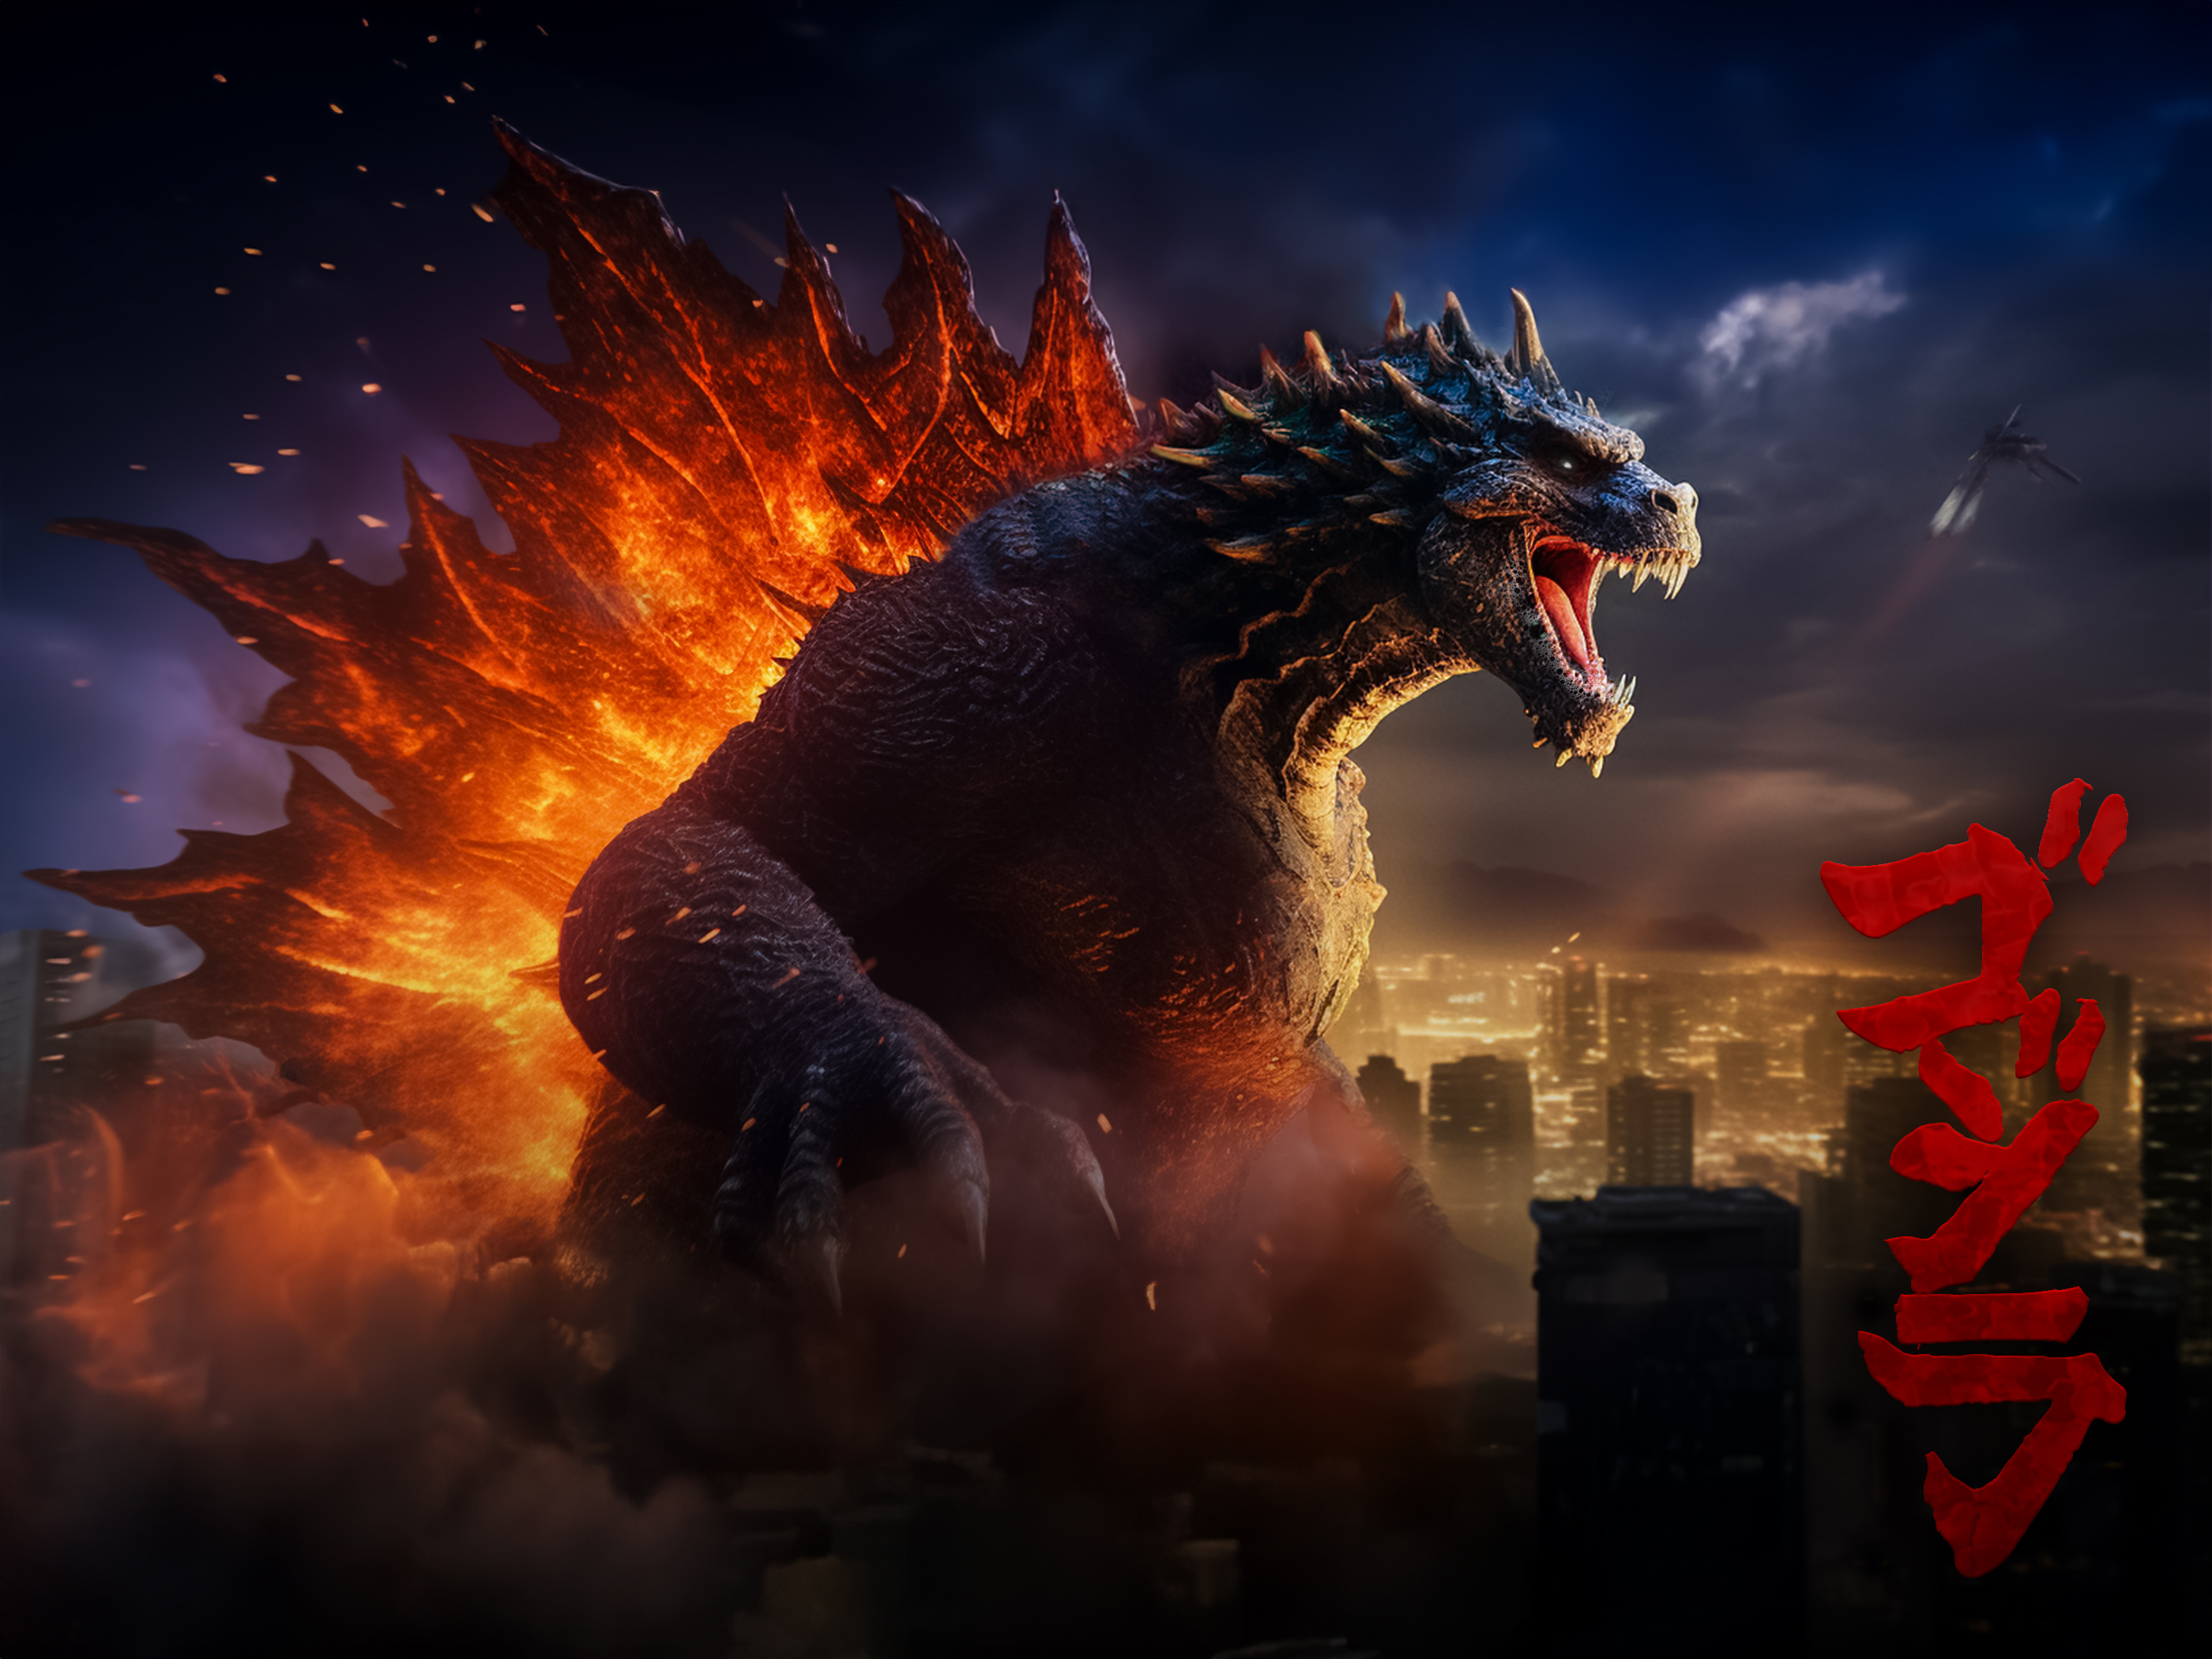 MMD Burning Godzilla by MaeveSterling on DeviantArt